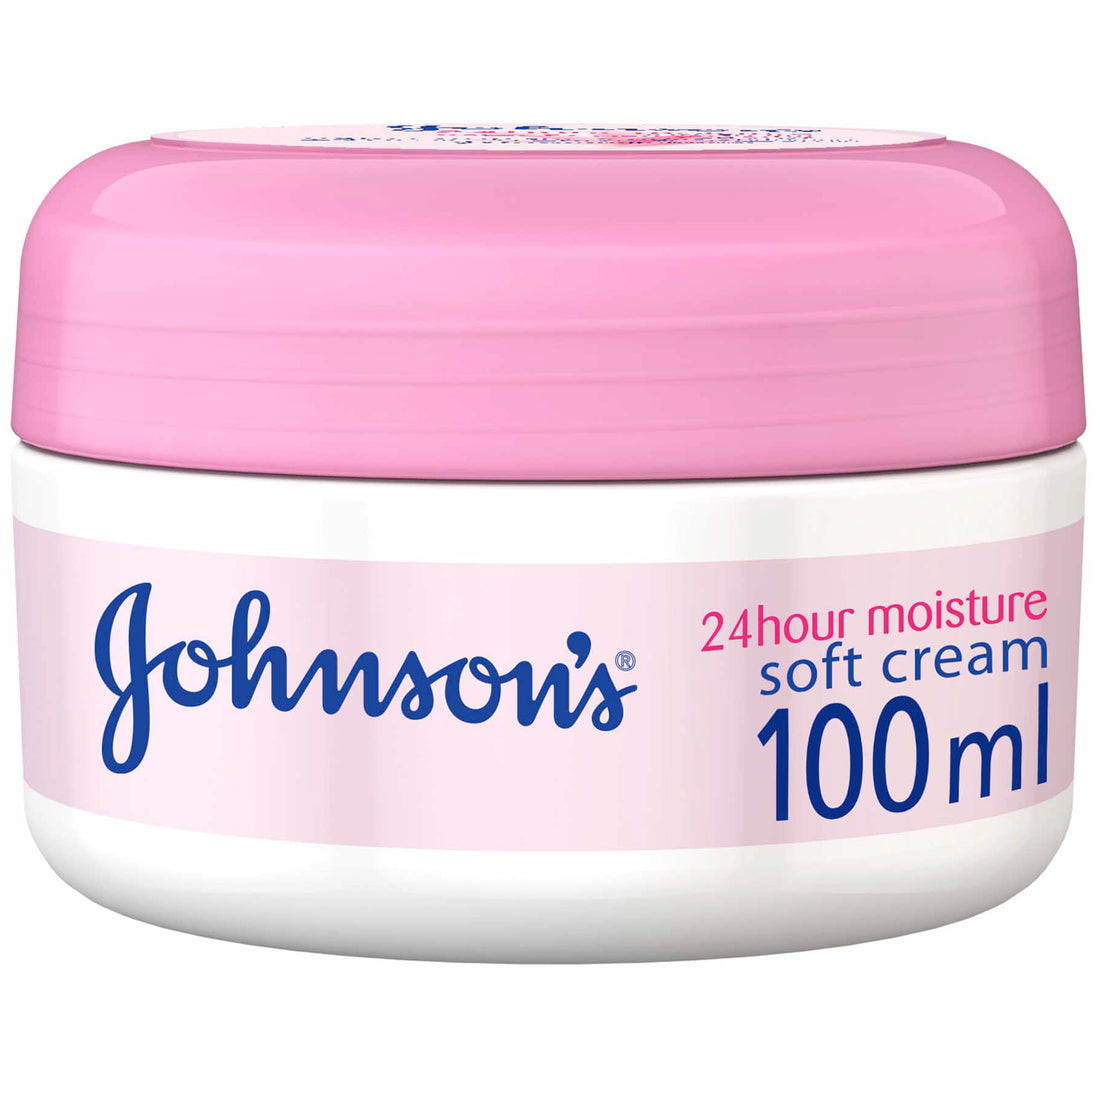 JOHNSON’S Body Cream, 24 HOUR Moisture, Soft, 100ml